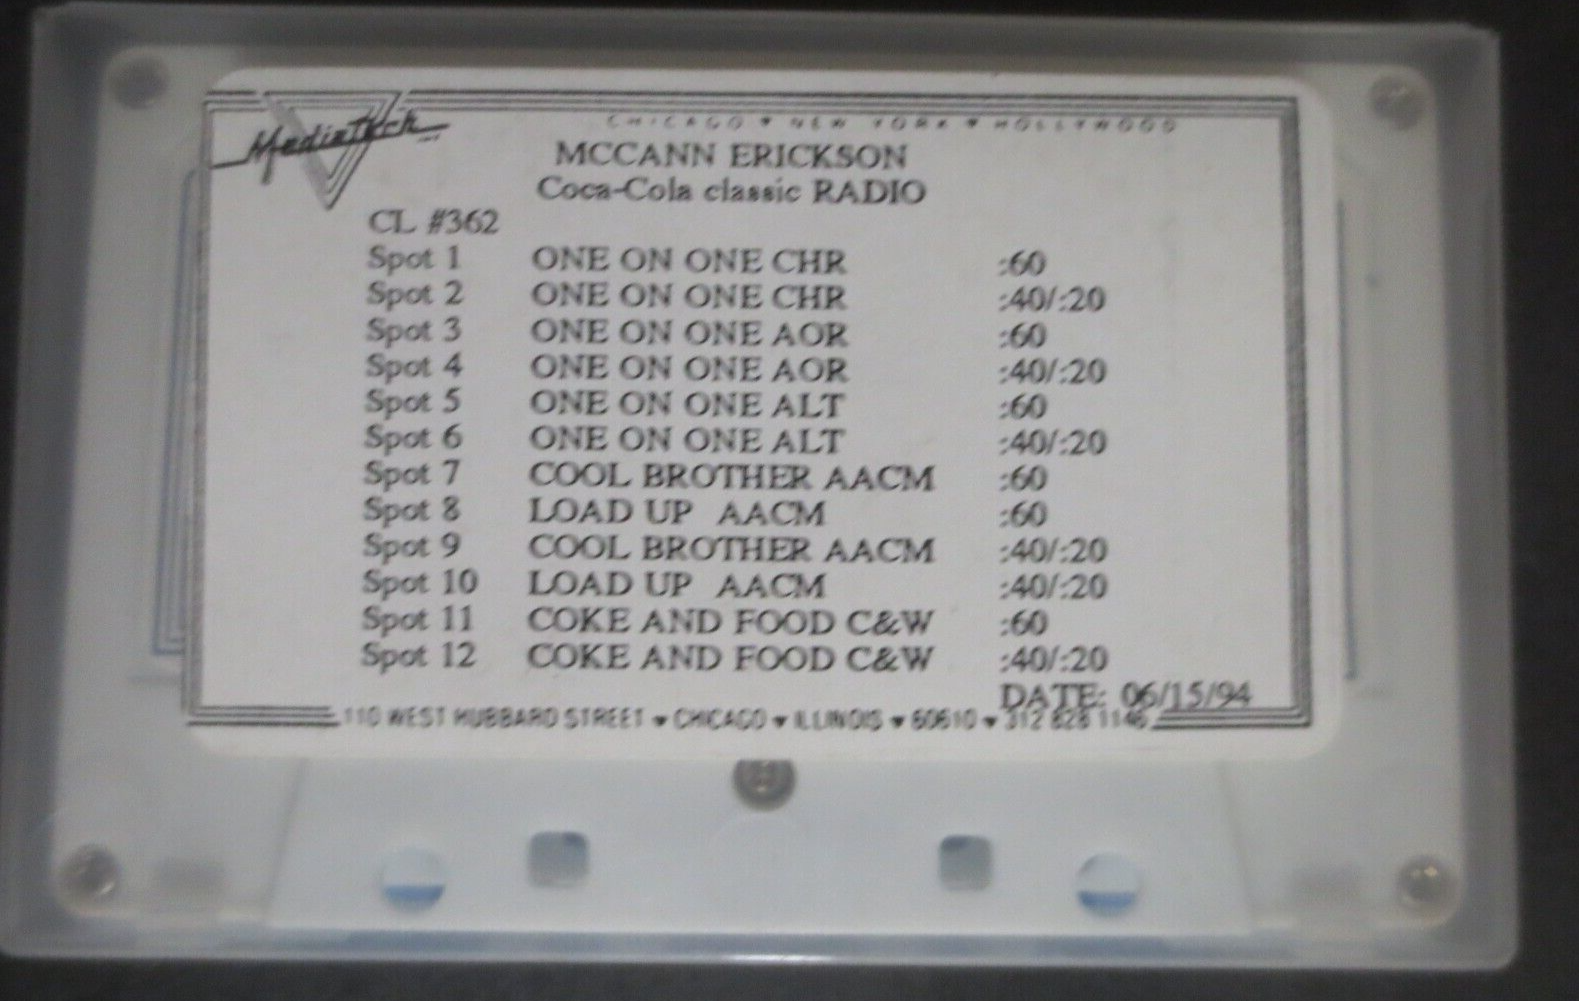 Primary image for Coca-Cola Classic Radio Spots McCann Erickson Tape 6/15/94